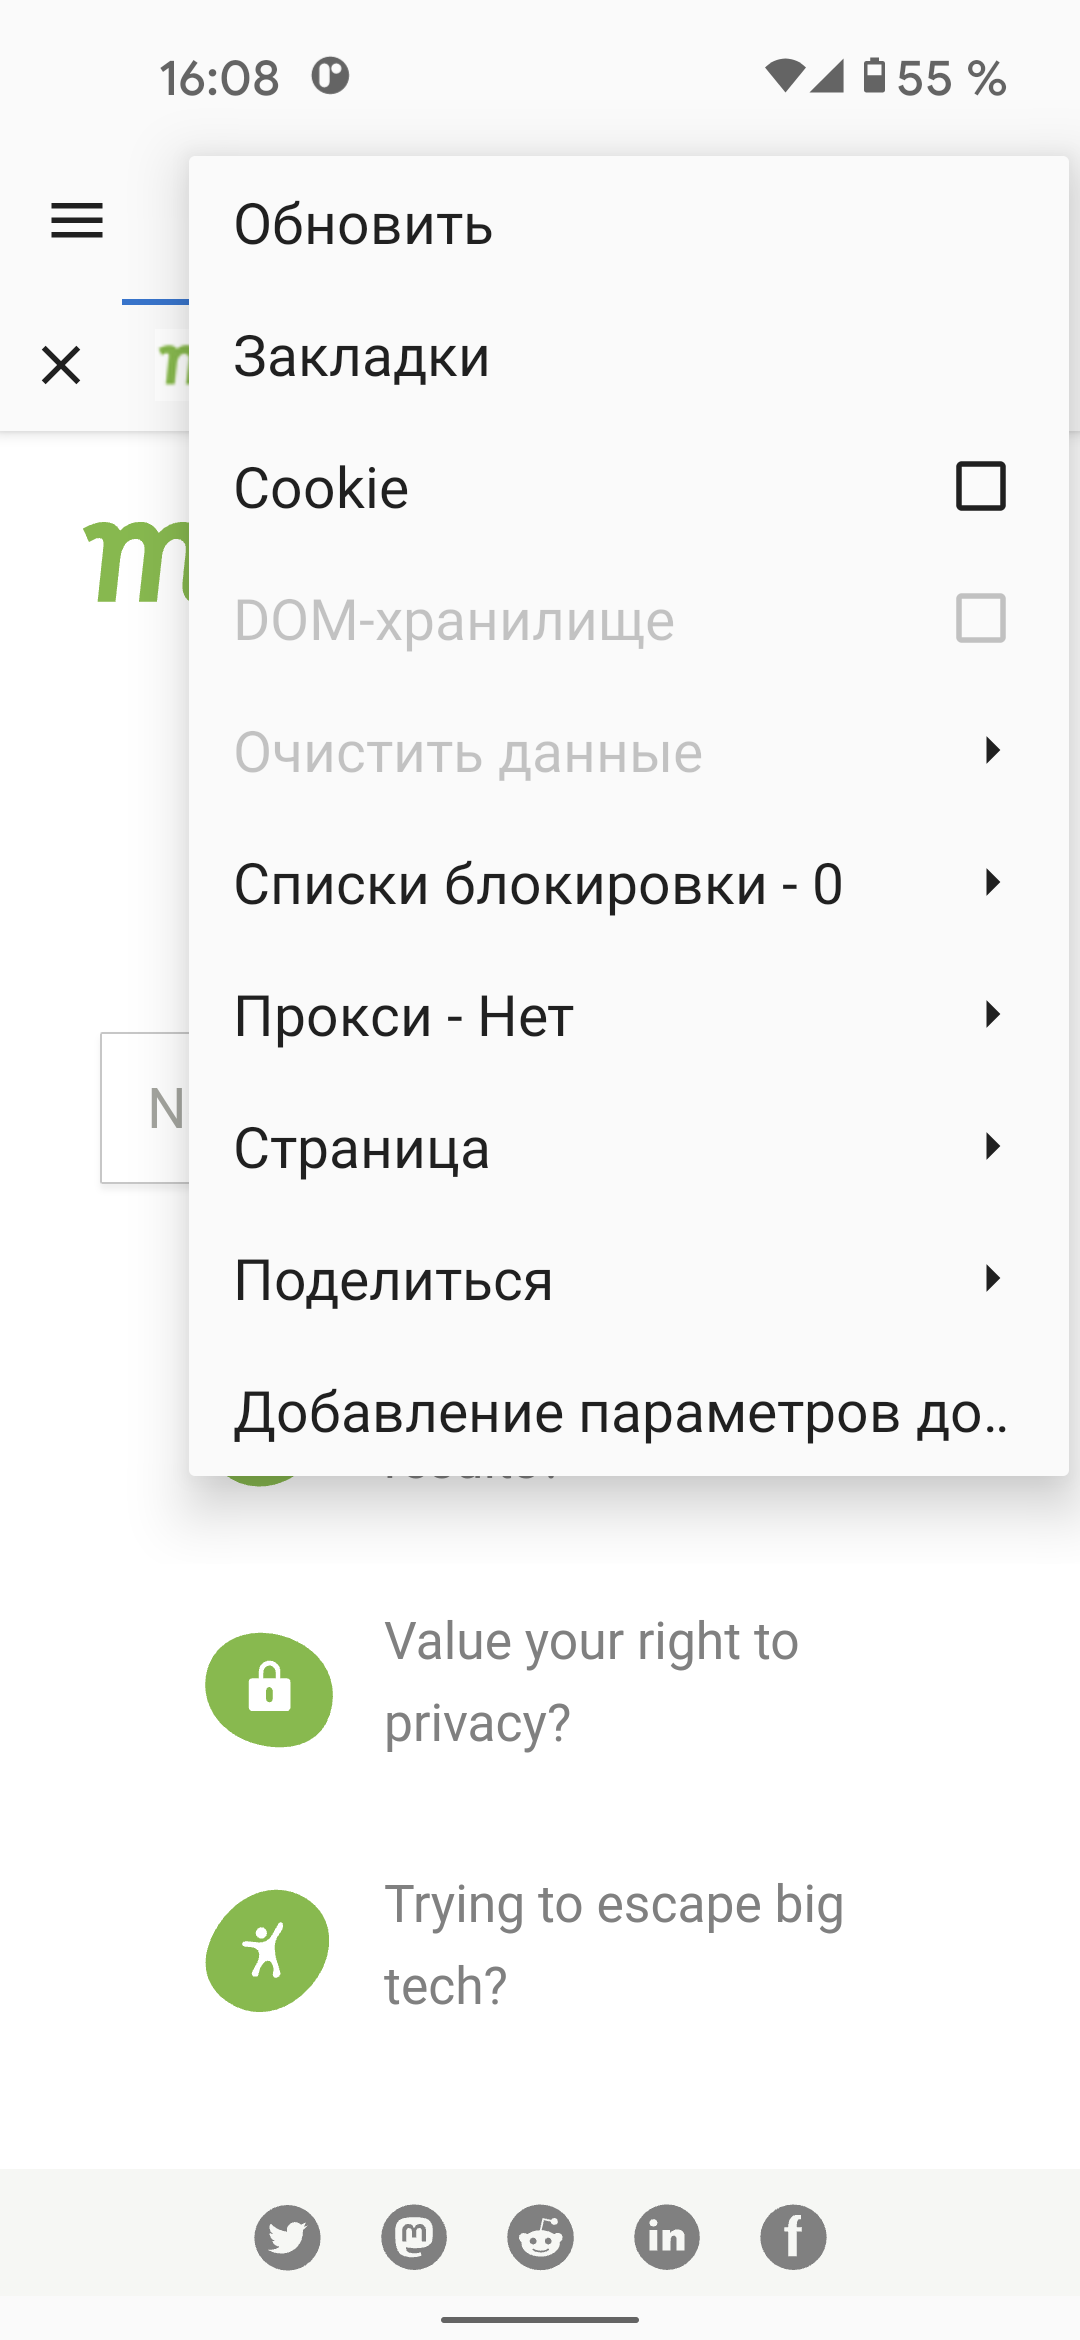 fastlane/metadata/android/ru-RU/images/phoneScreenshots/03-OptionsMenu.png